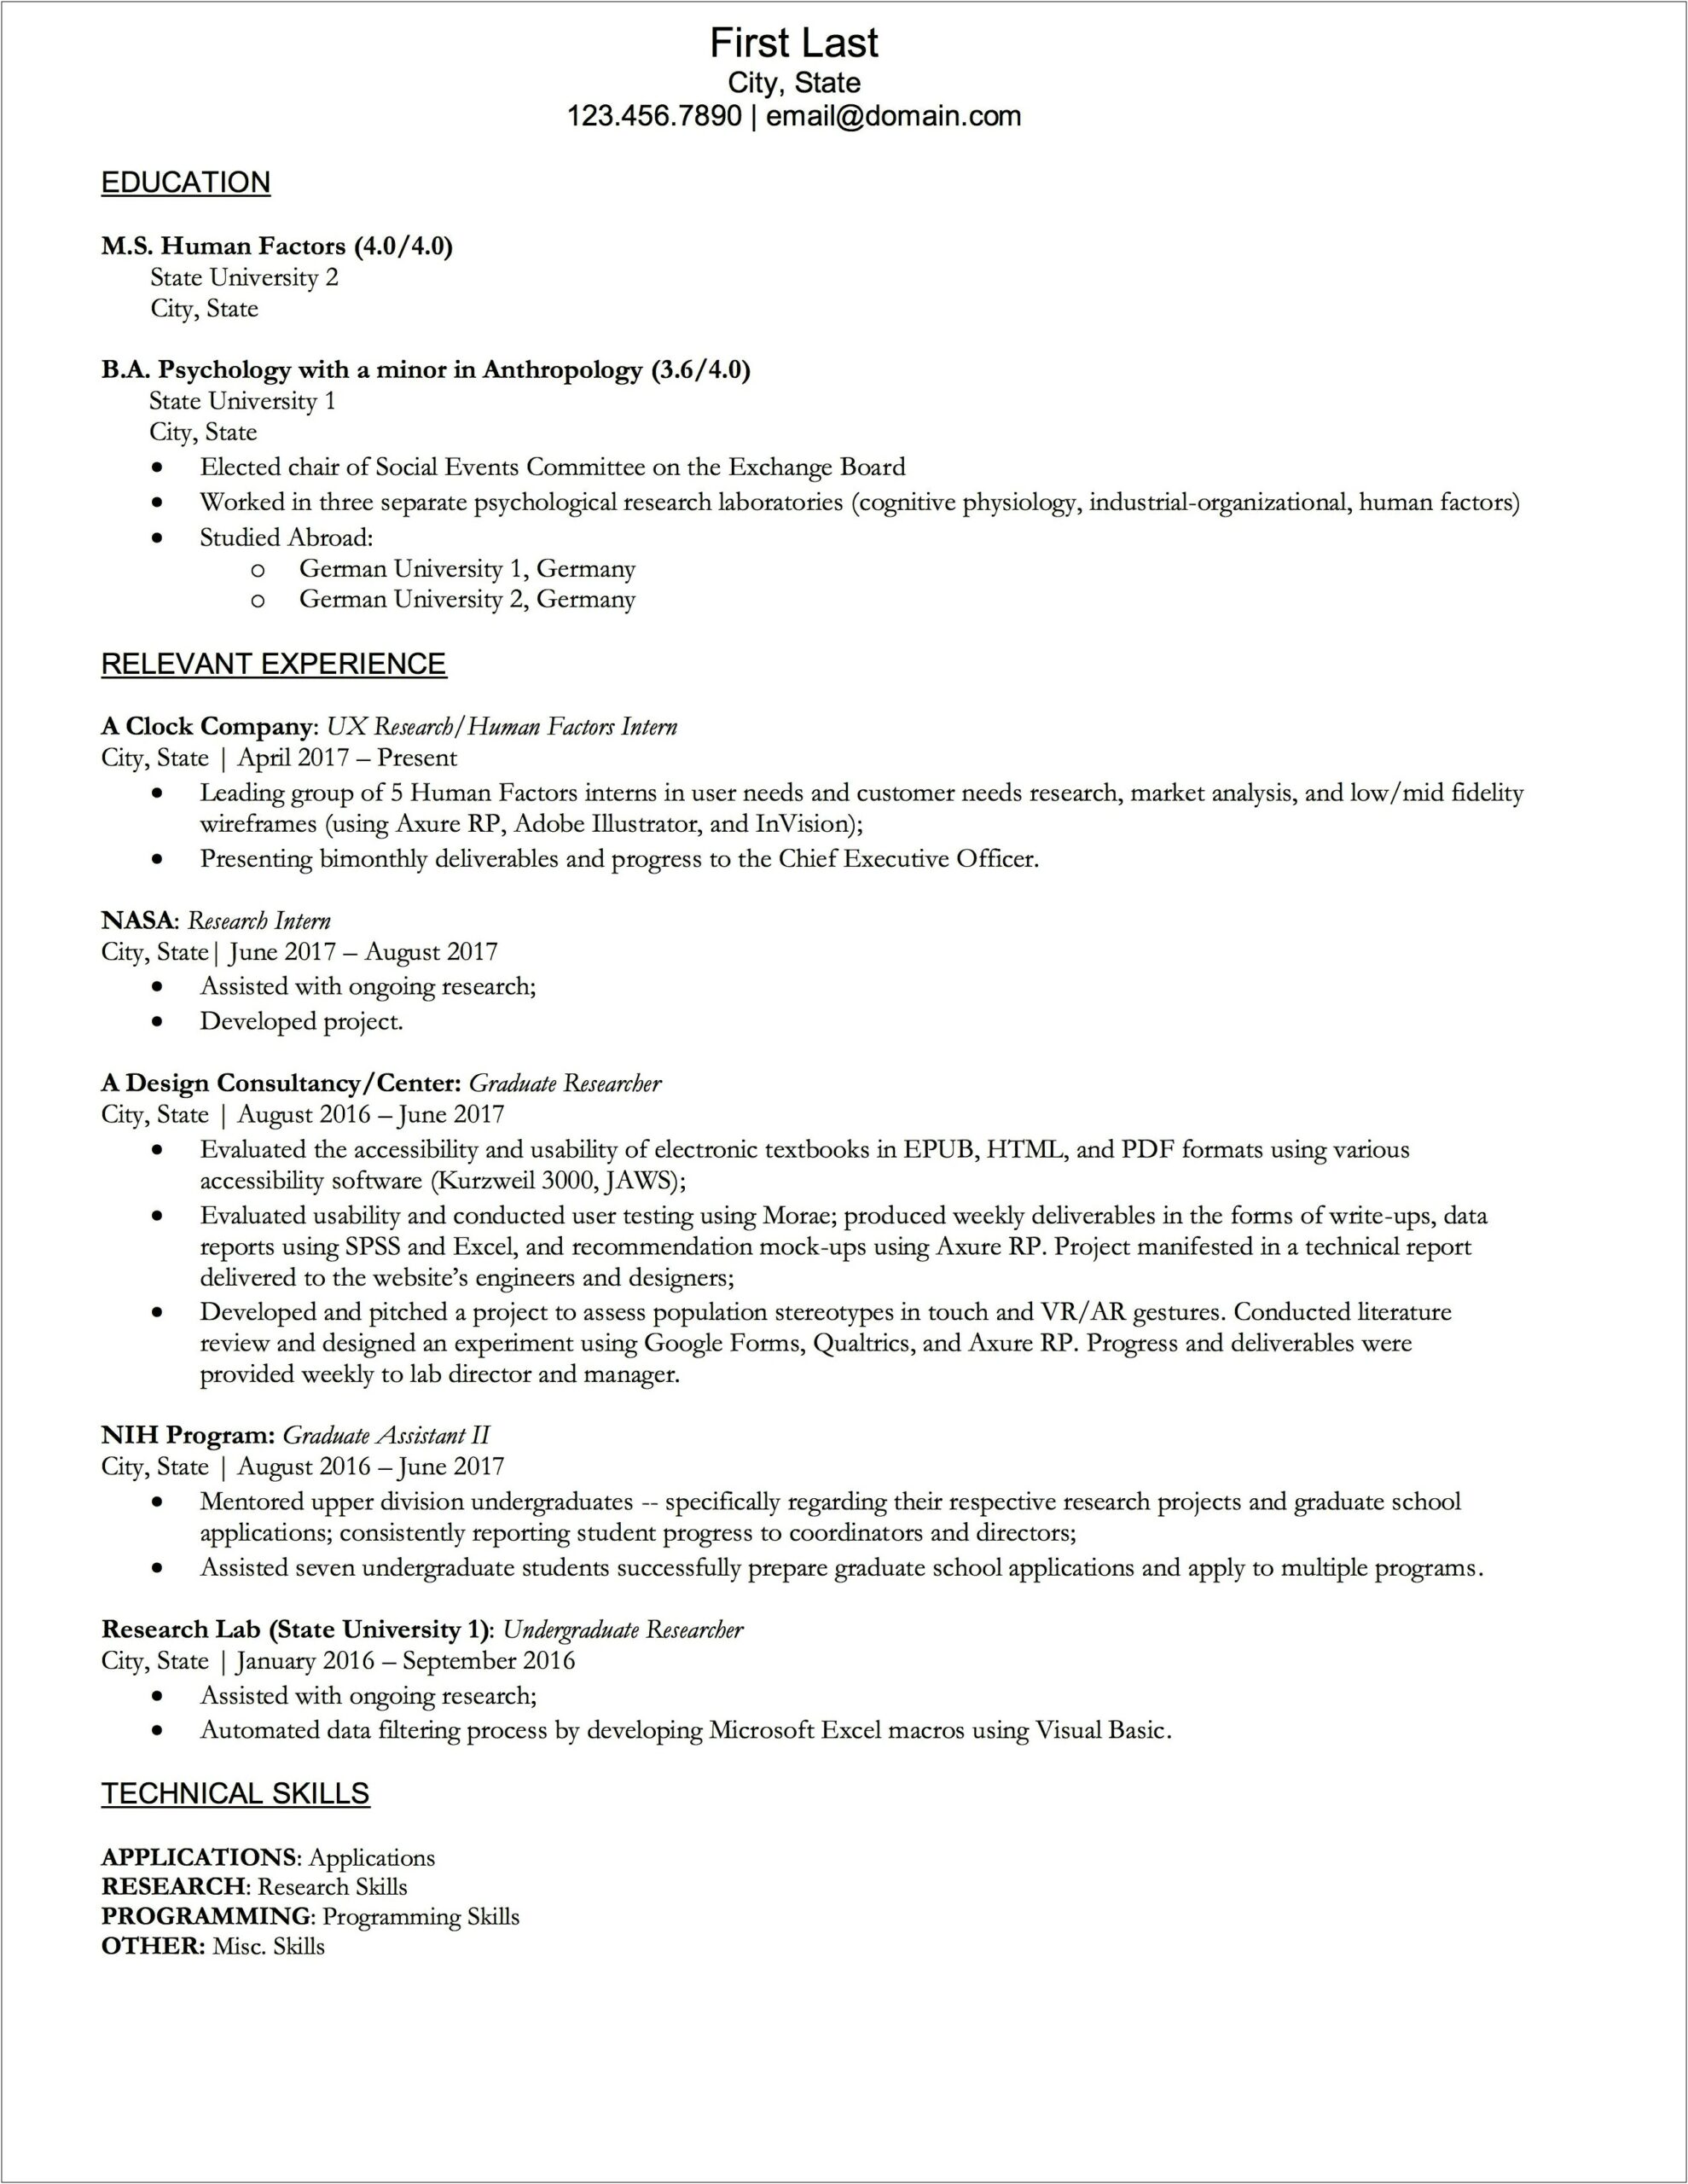 Grad School Application Resume Relevant Experience